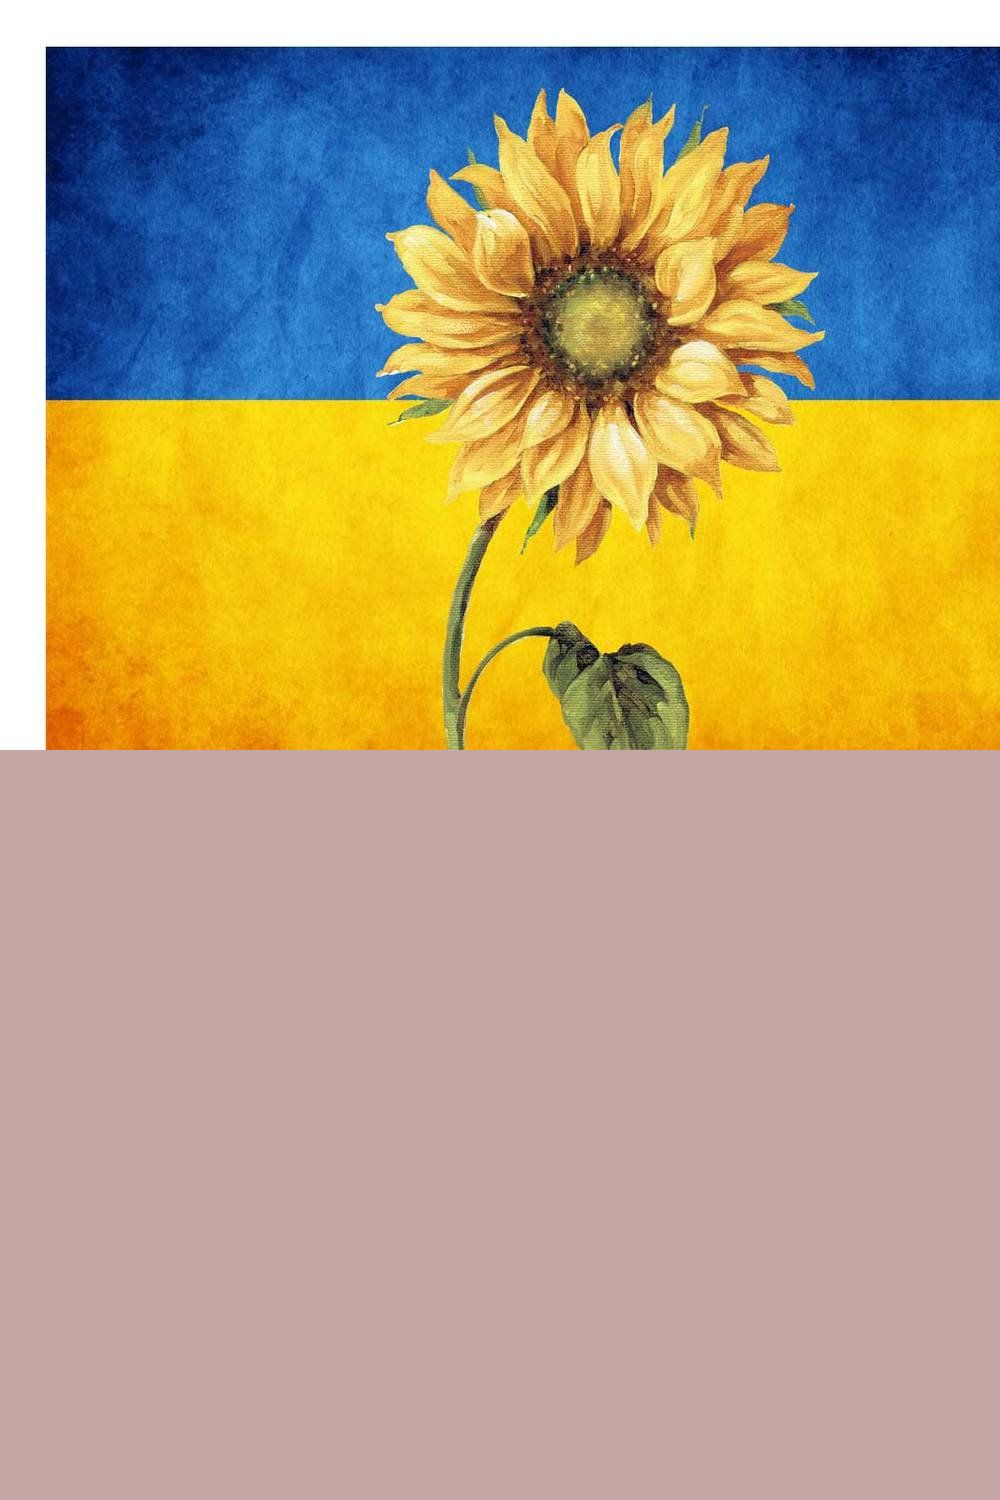 Sunflower On Ukraine Flag Png pinterest preview image.